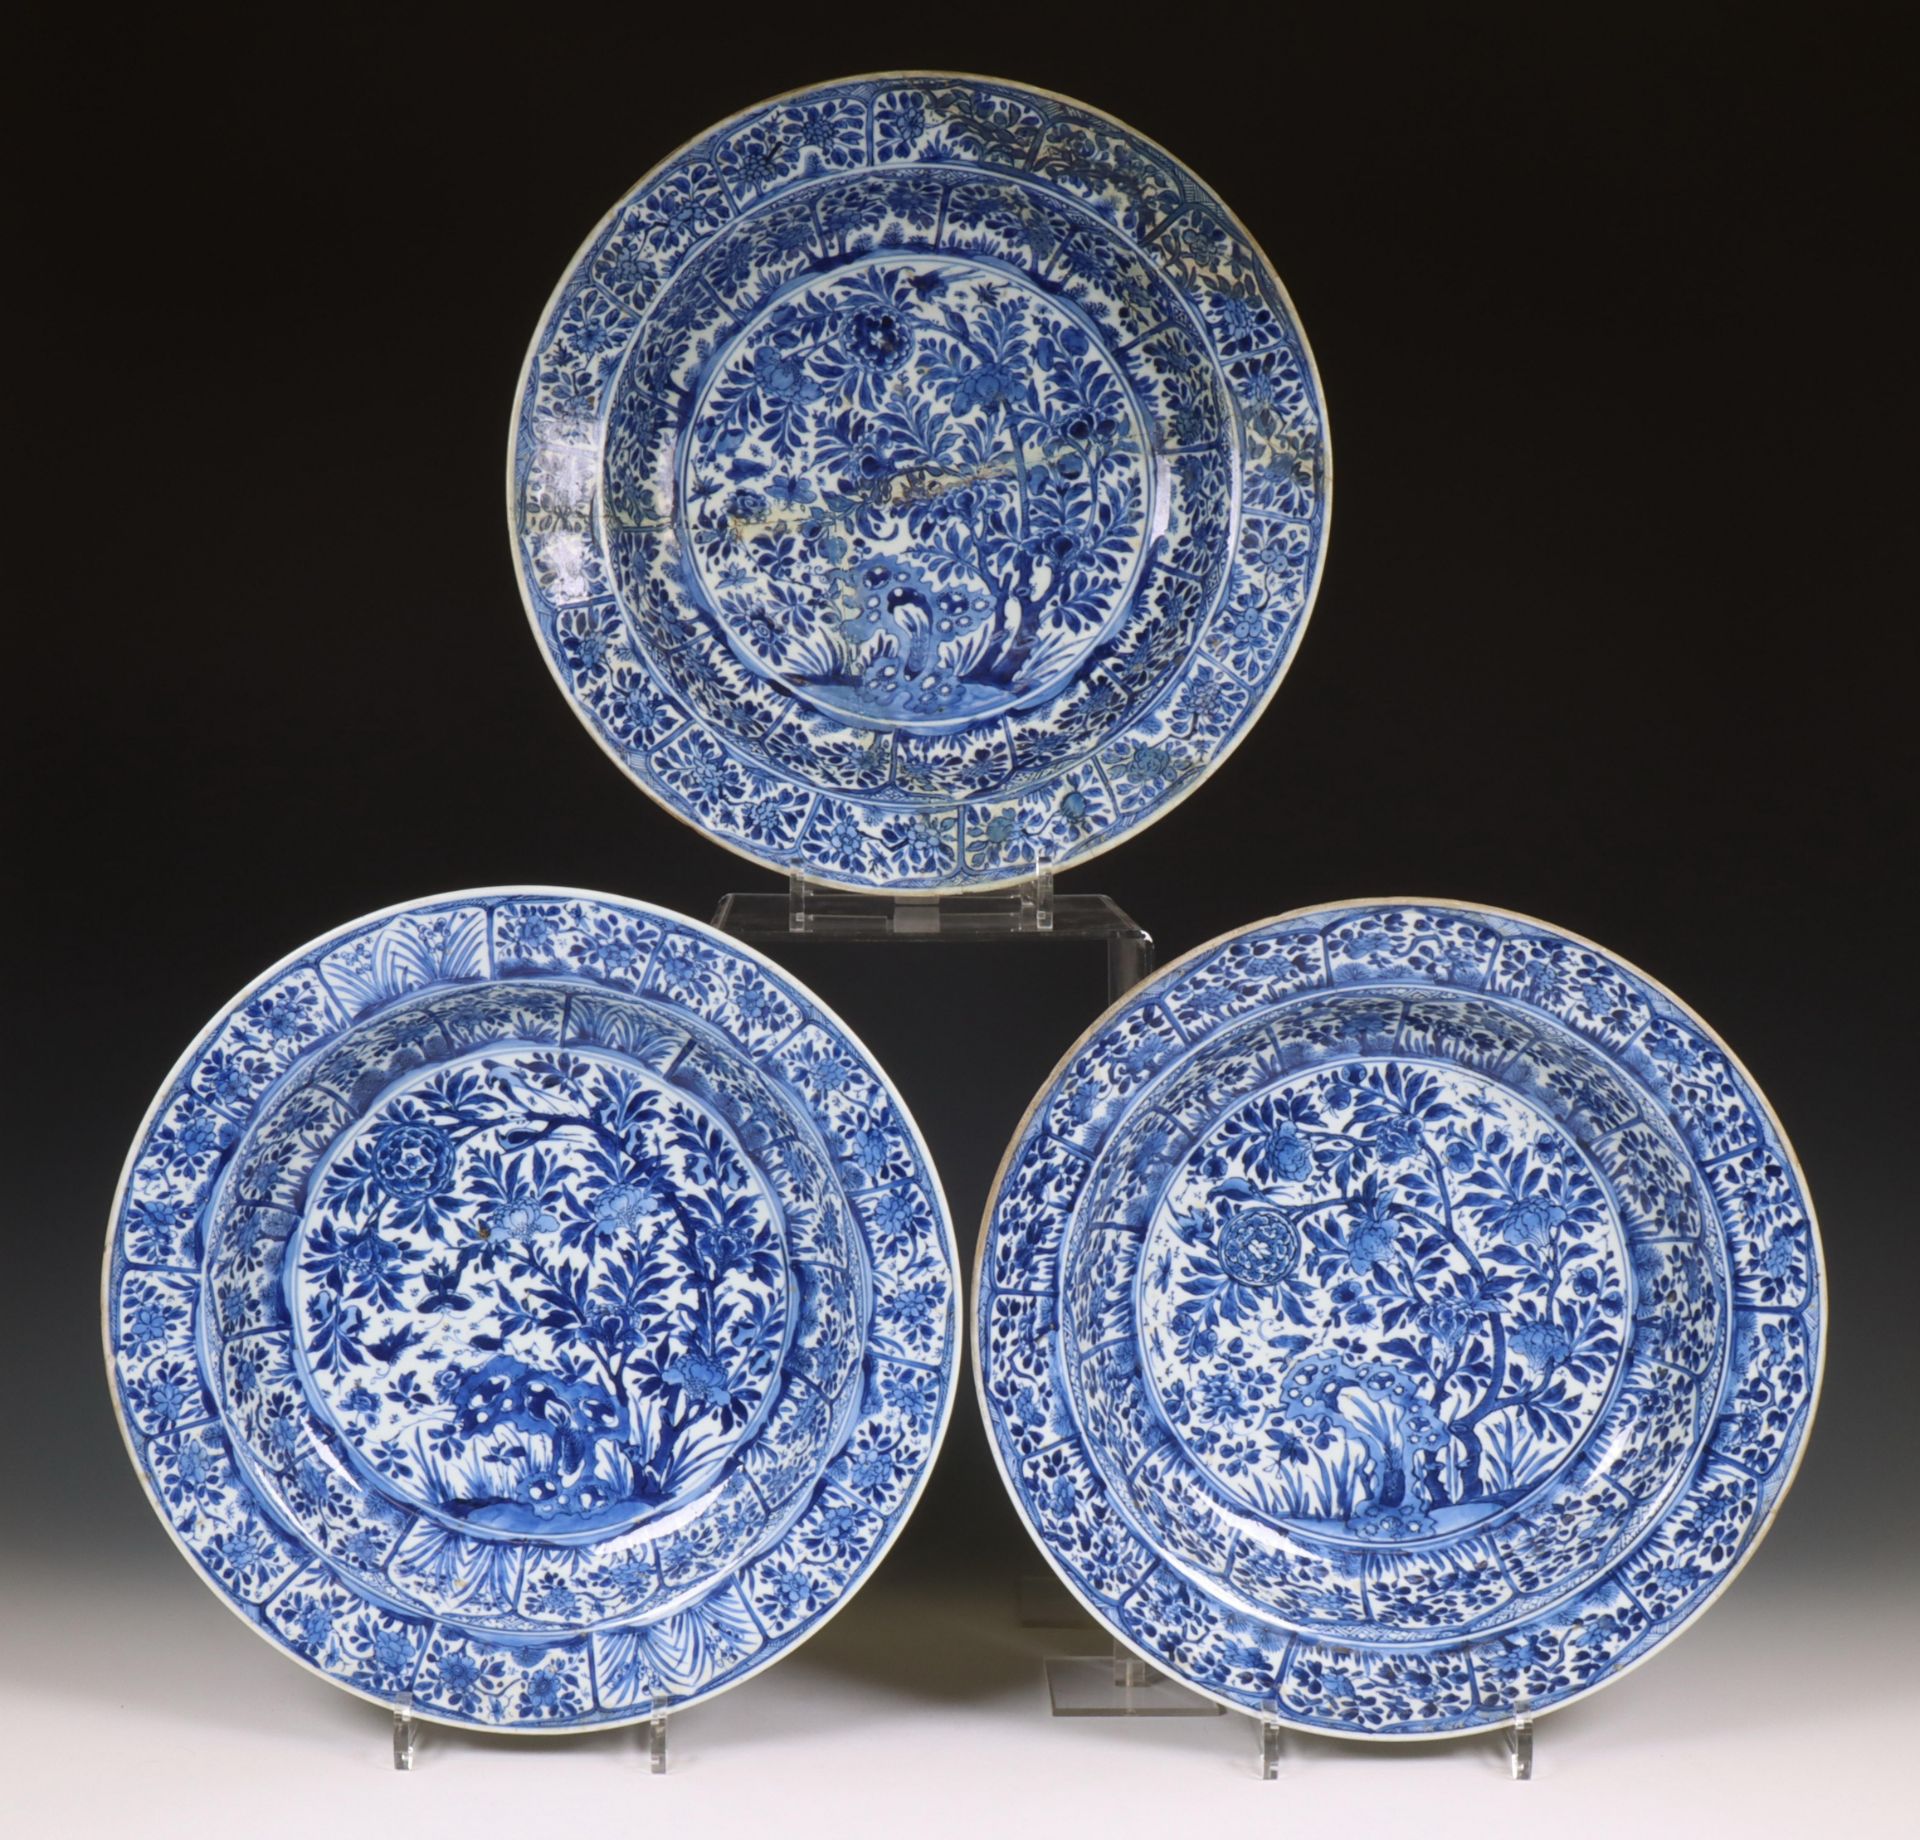 China, set of three blue and white porcelain deep dishes, Kangxi period (1662-1722),